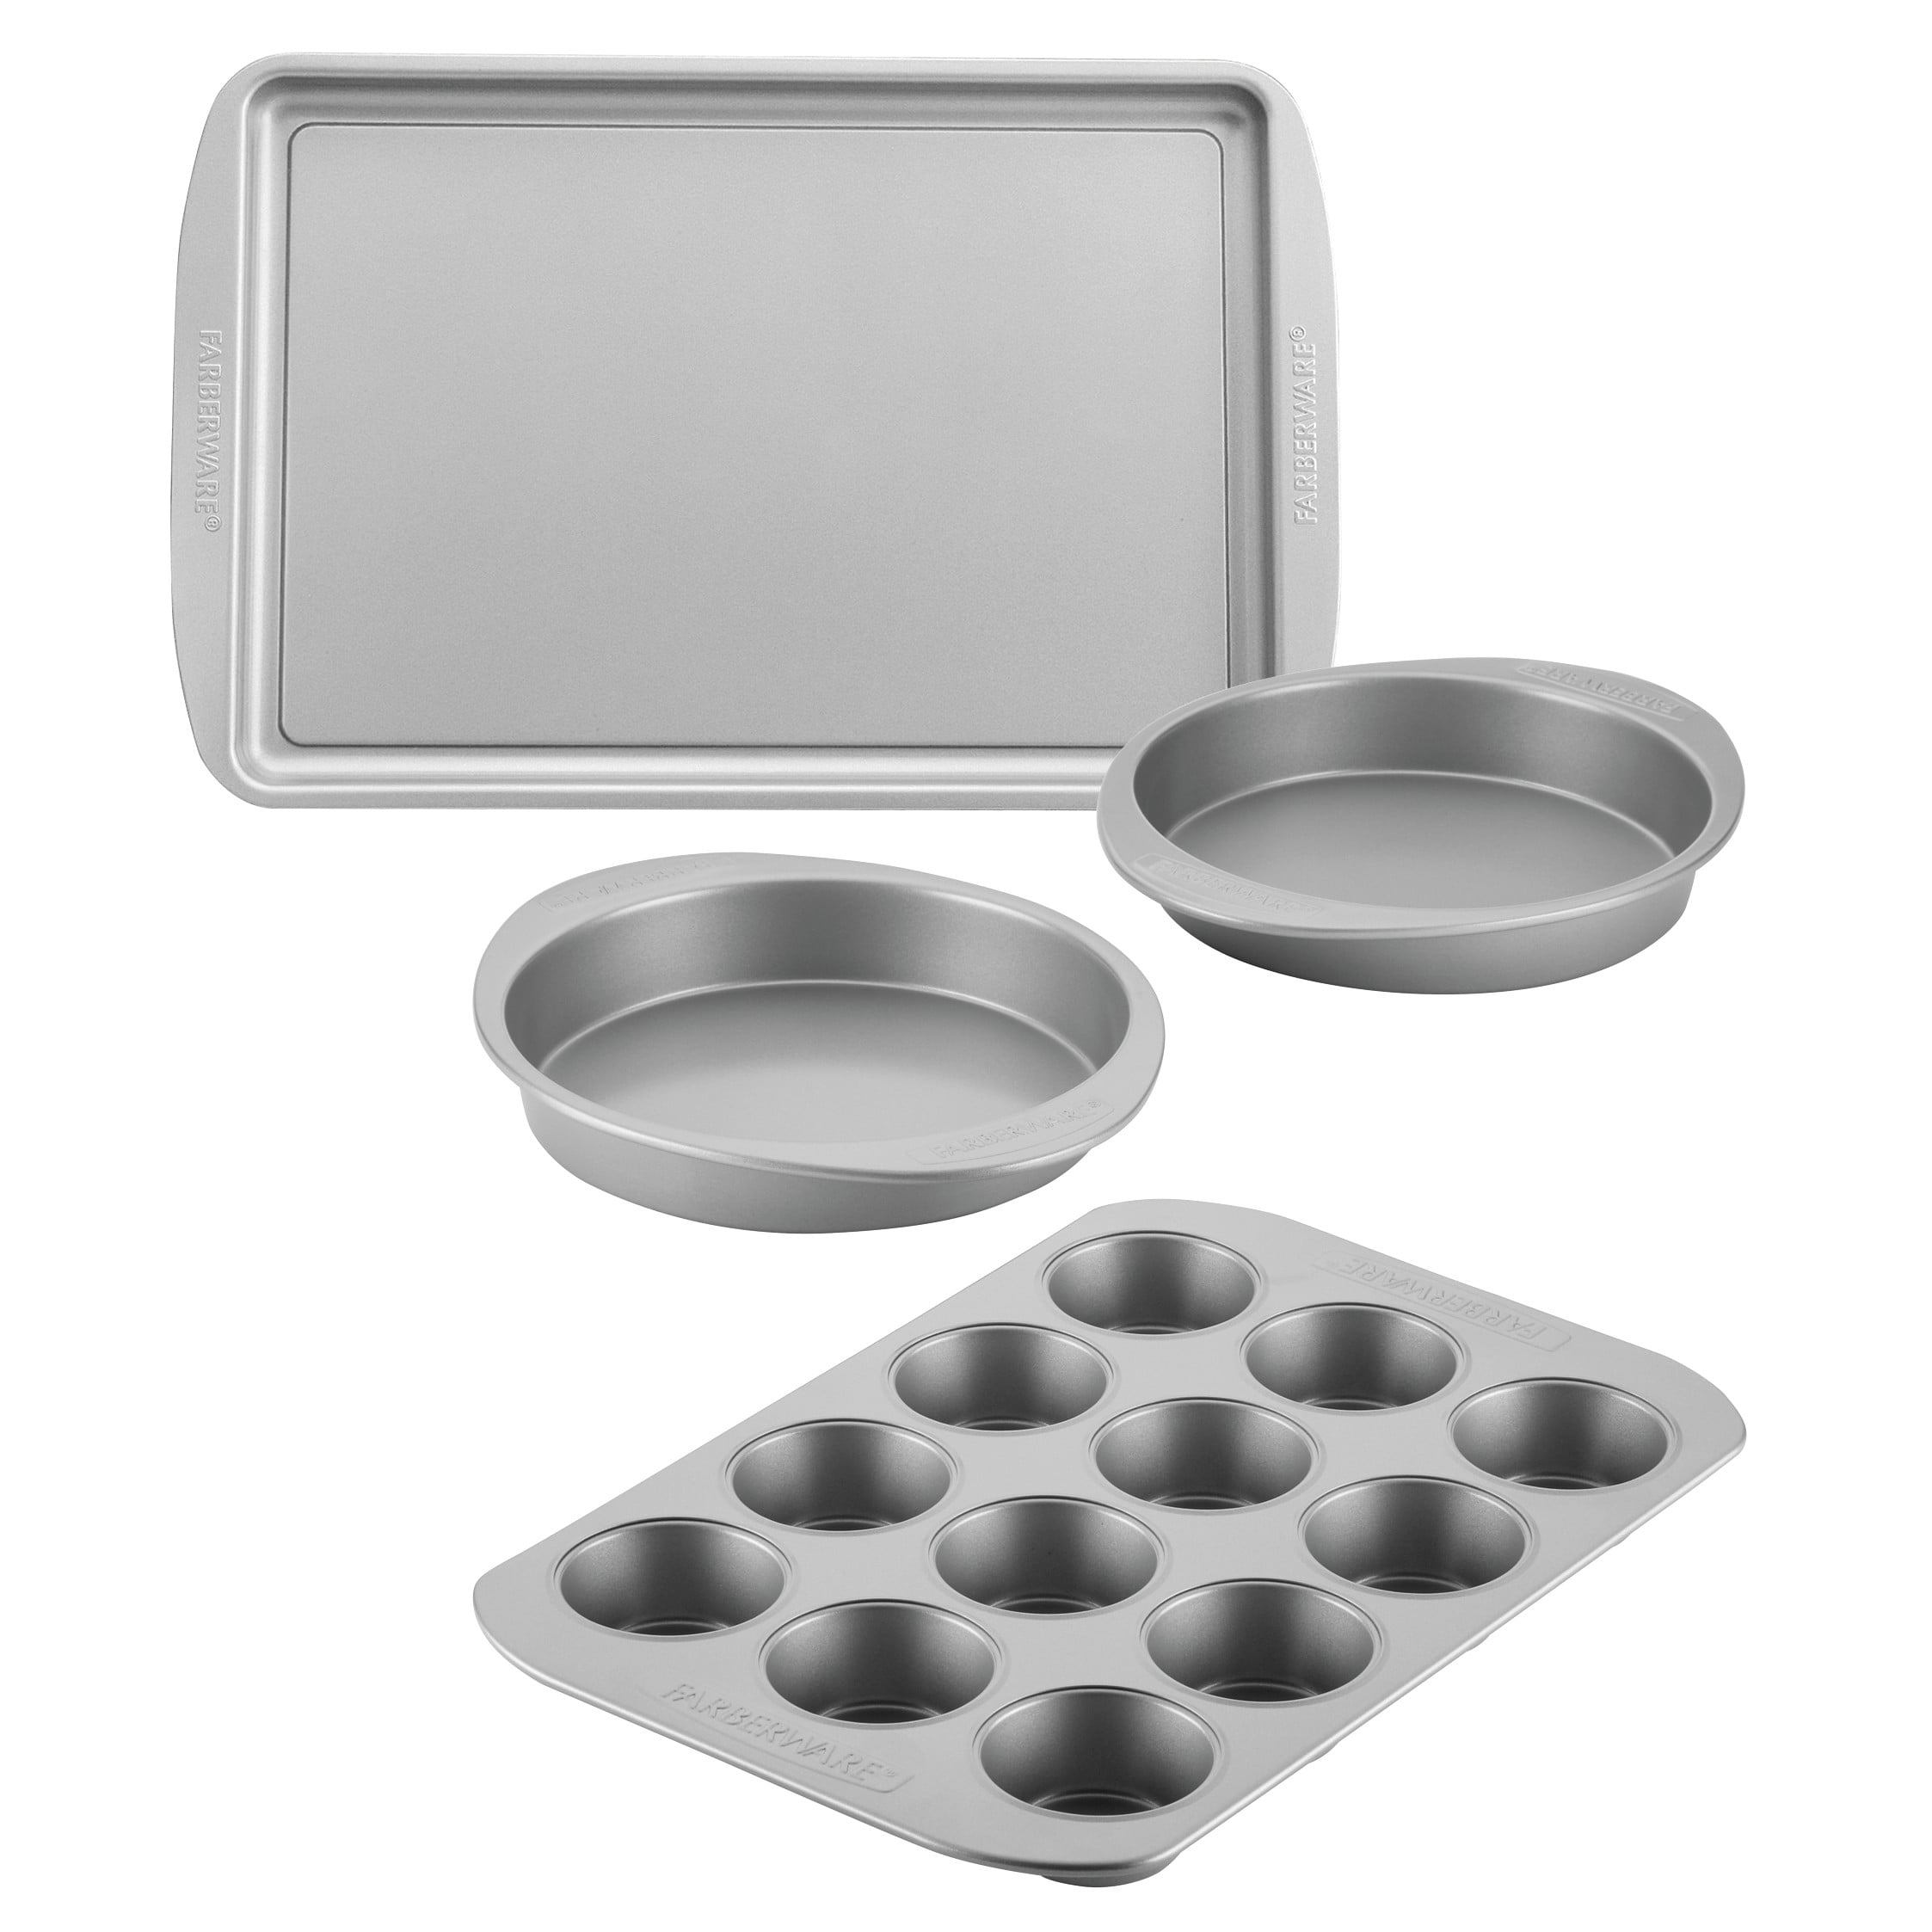 Farberware Nonstick Bakeware Set, Nonstick Cookie Sheets / Baking Sheets -  2 Piece, Gray